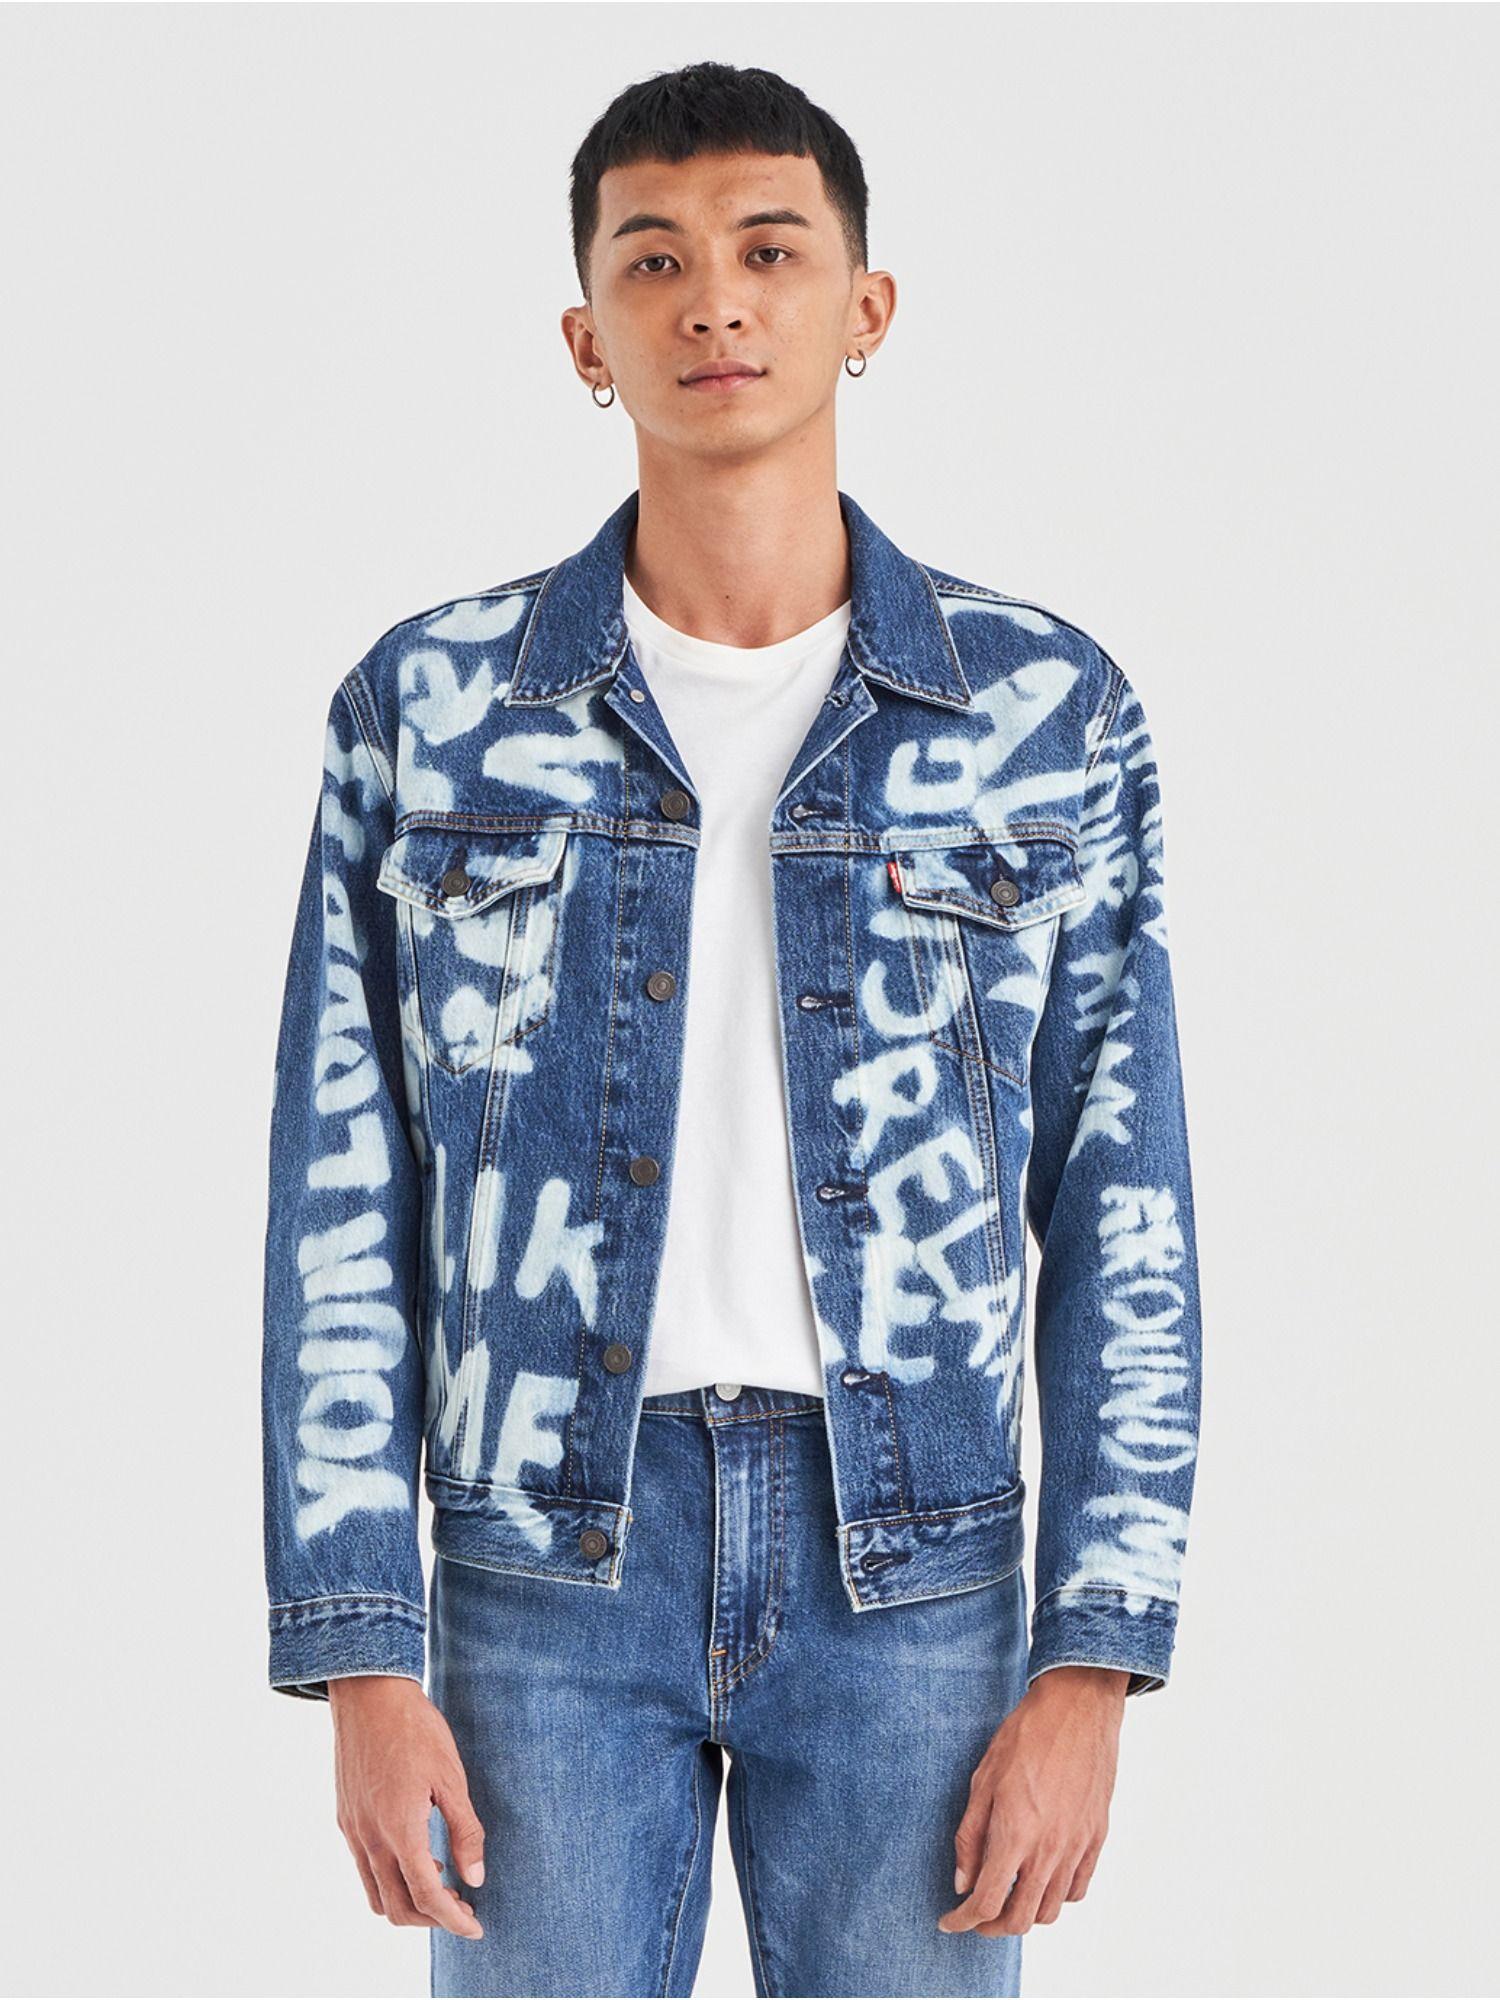 men's graphic print blue spread collar jackets